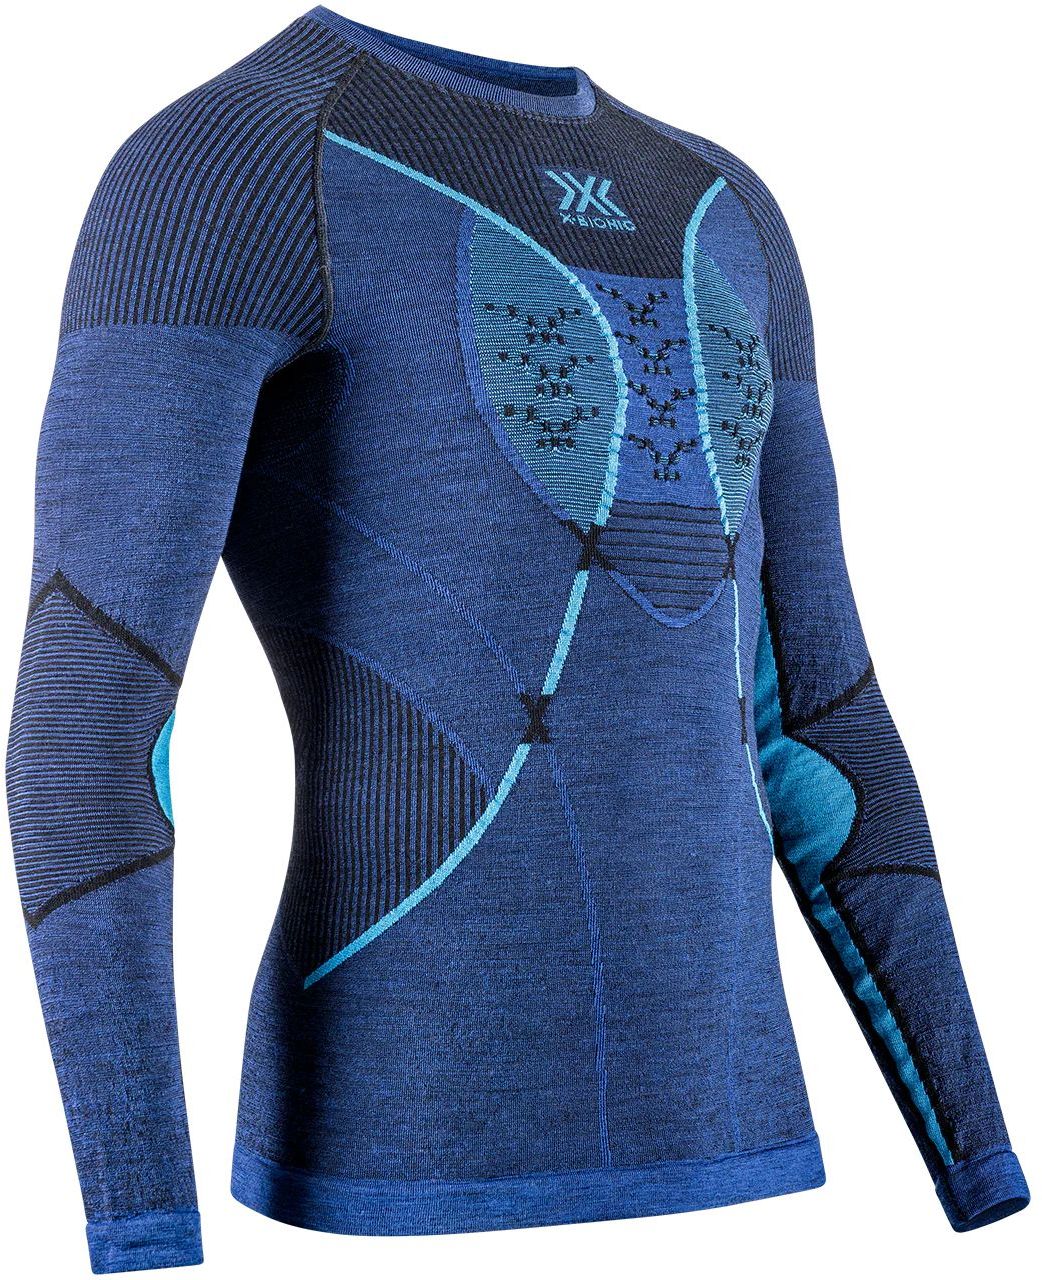 E-shop X-Bionic Merino Shirt Lg Sl Men - dark ocean/sky blue M